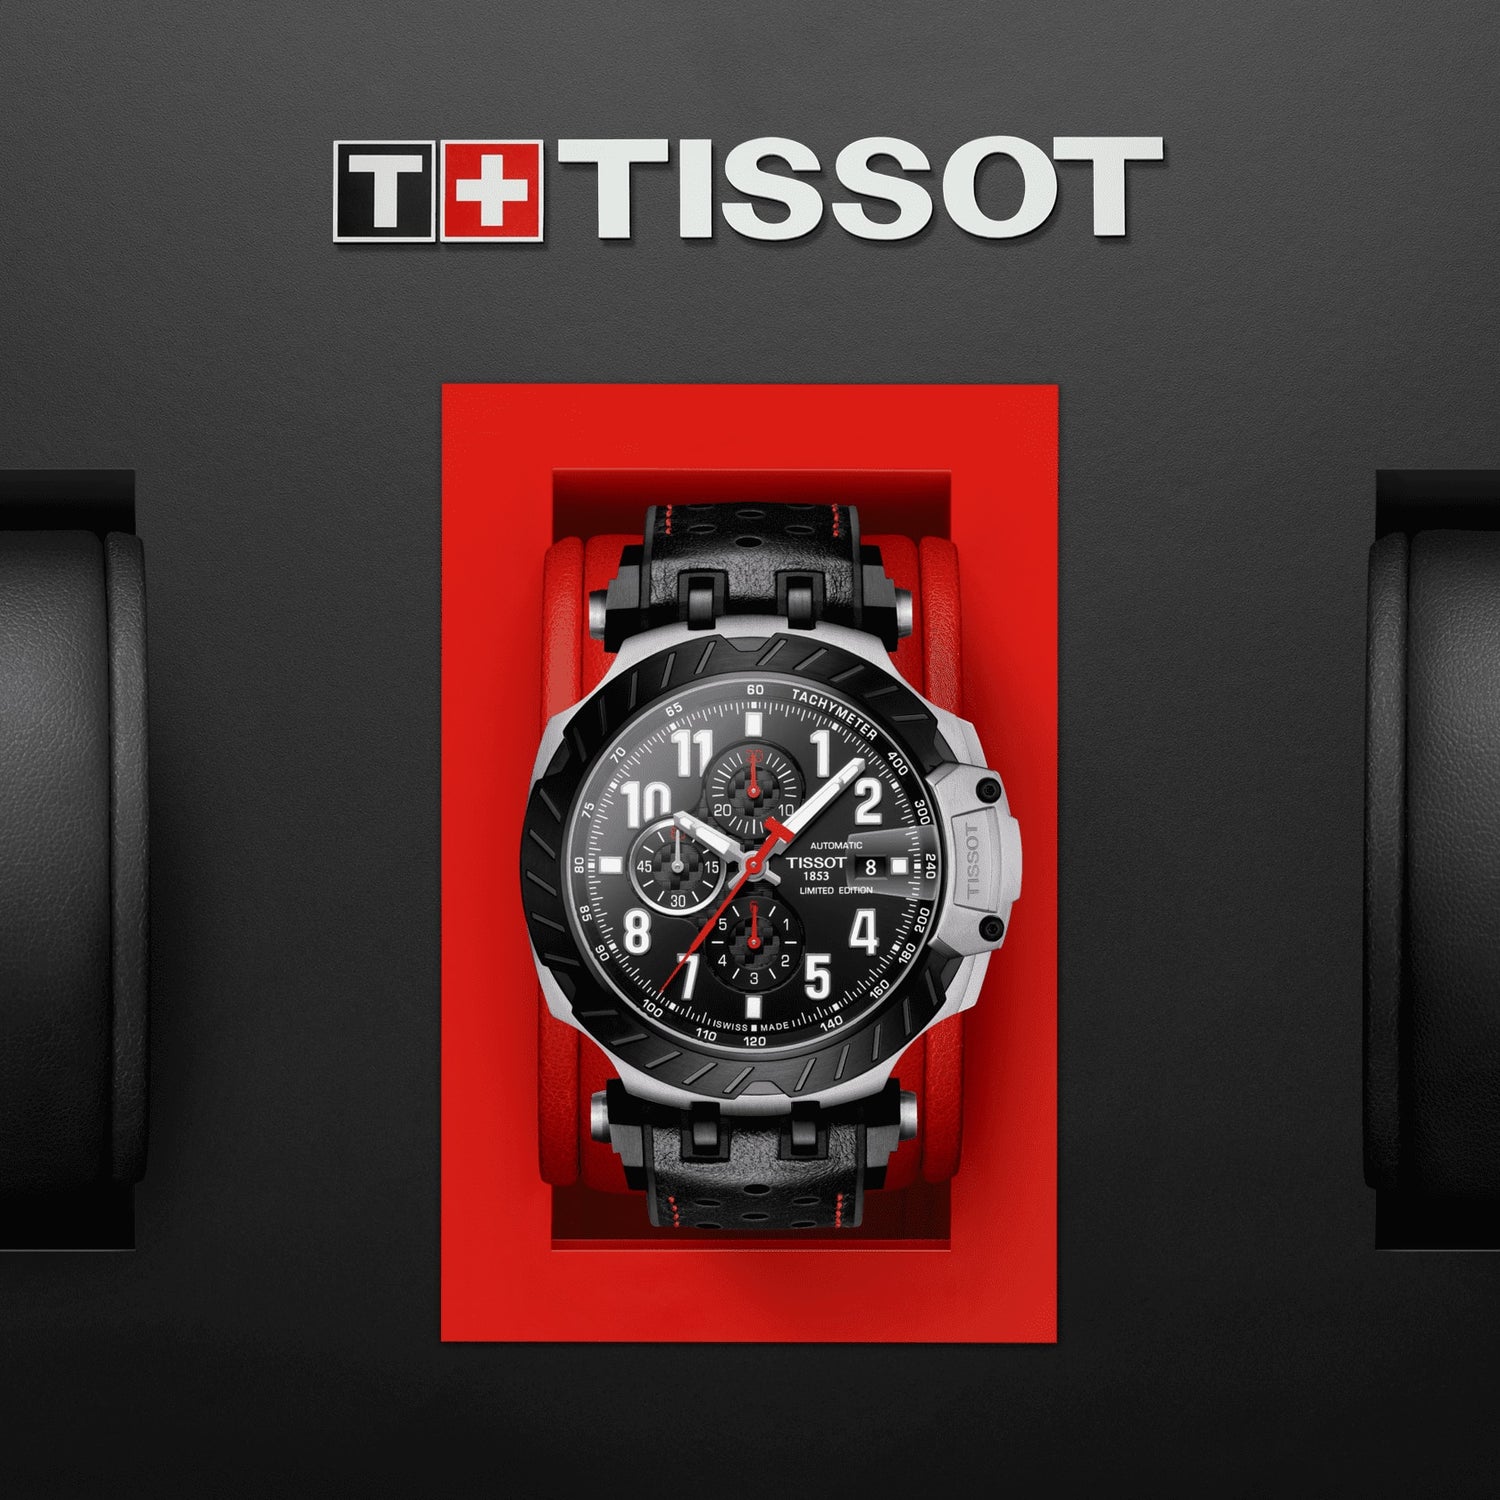 Tissot T-Race MotoGP Automatic Chronograph Limited Edition